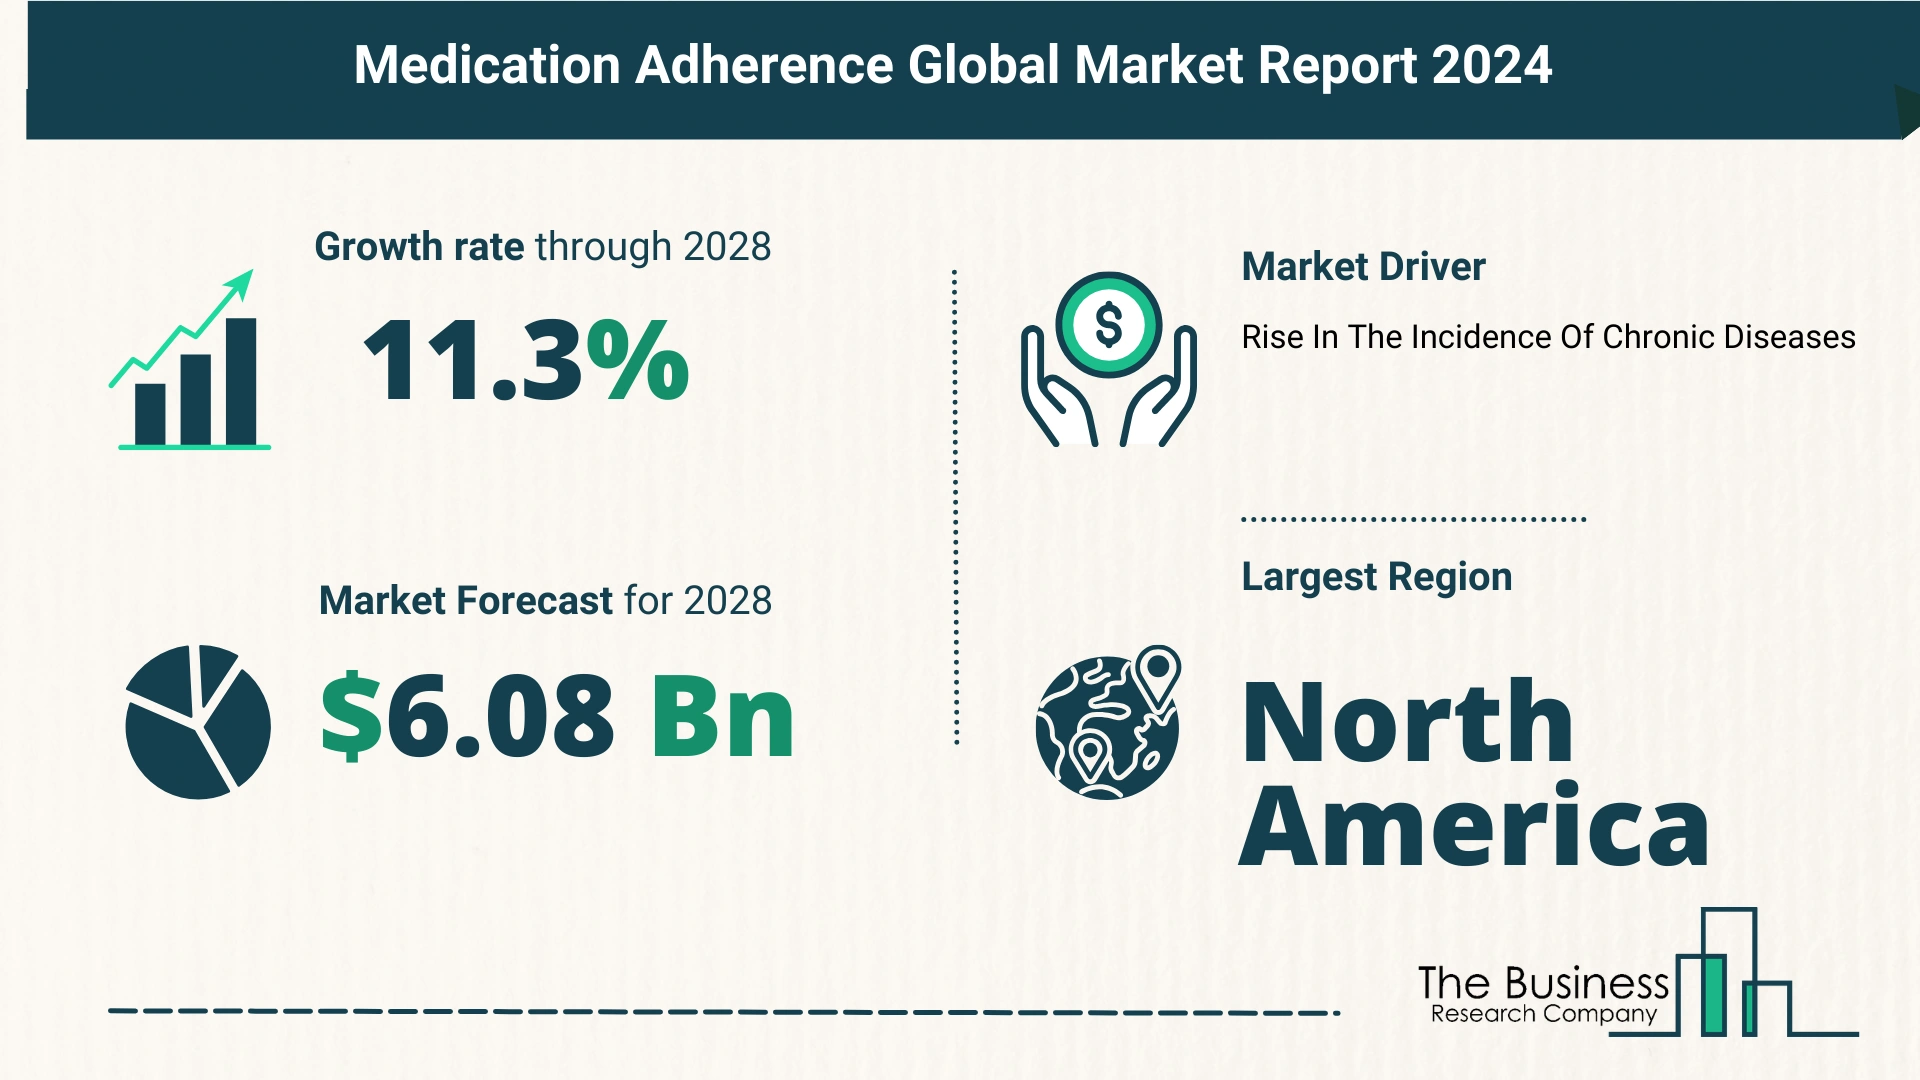 Global Medication Adherence Market Size